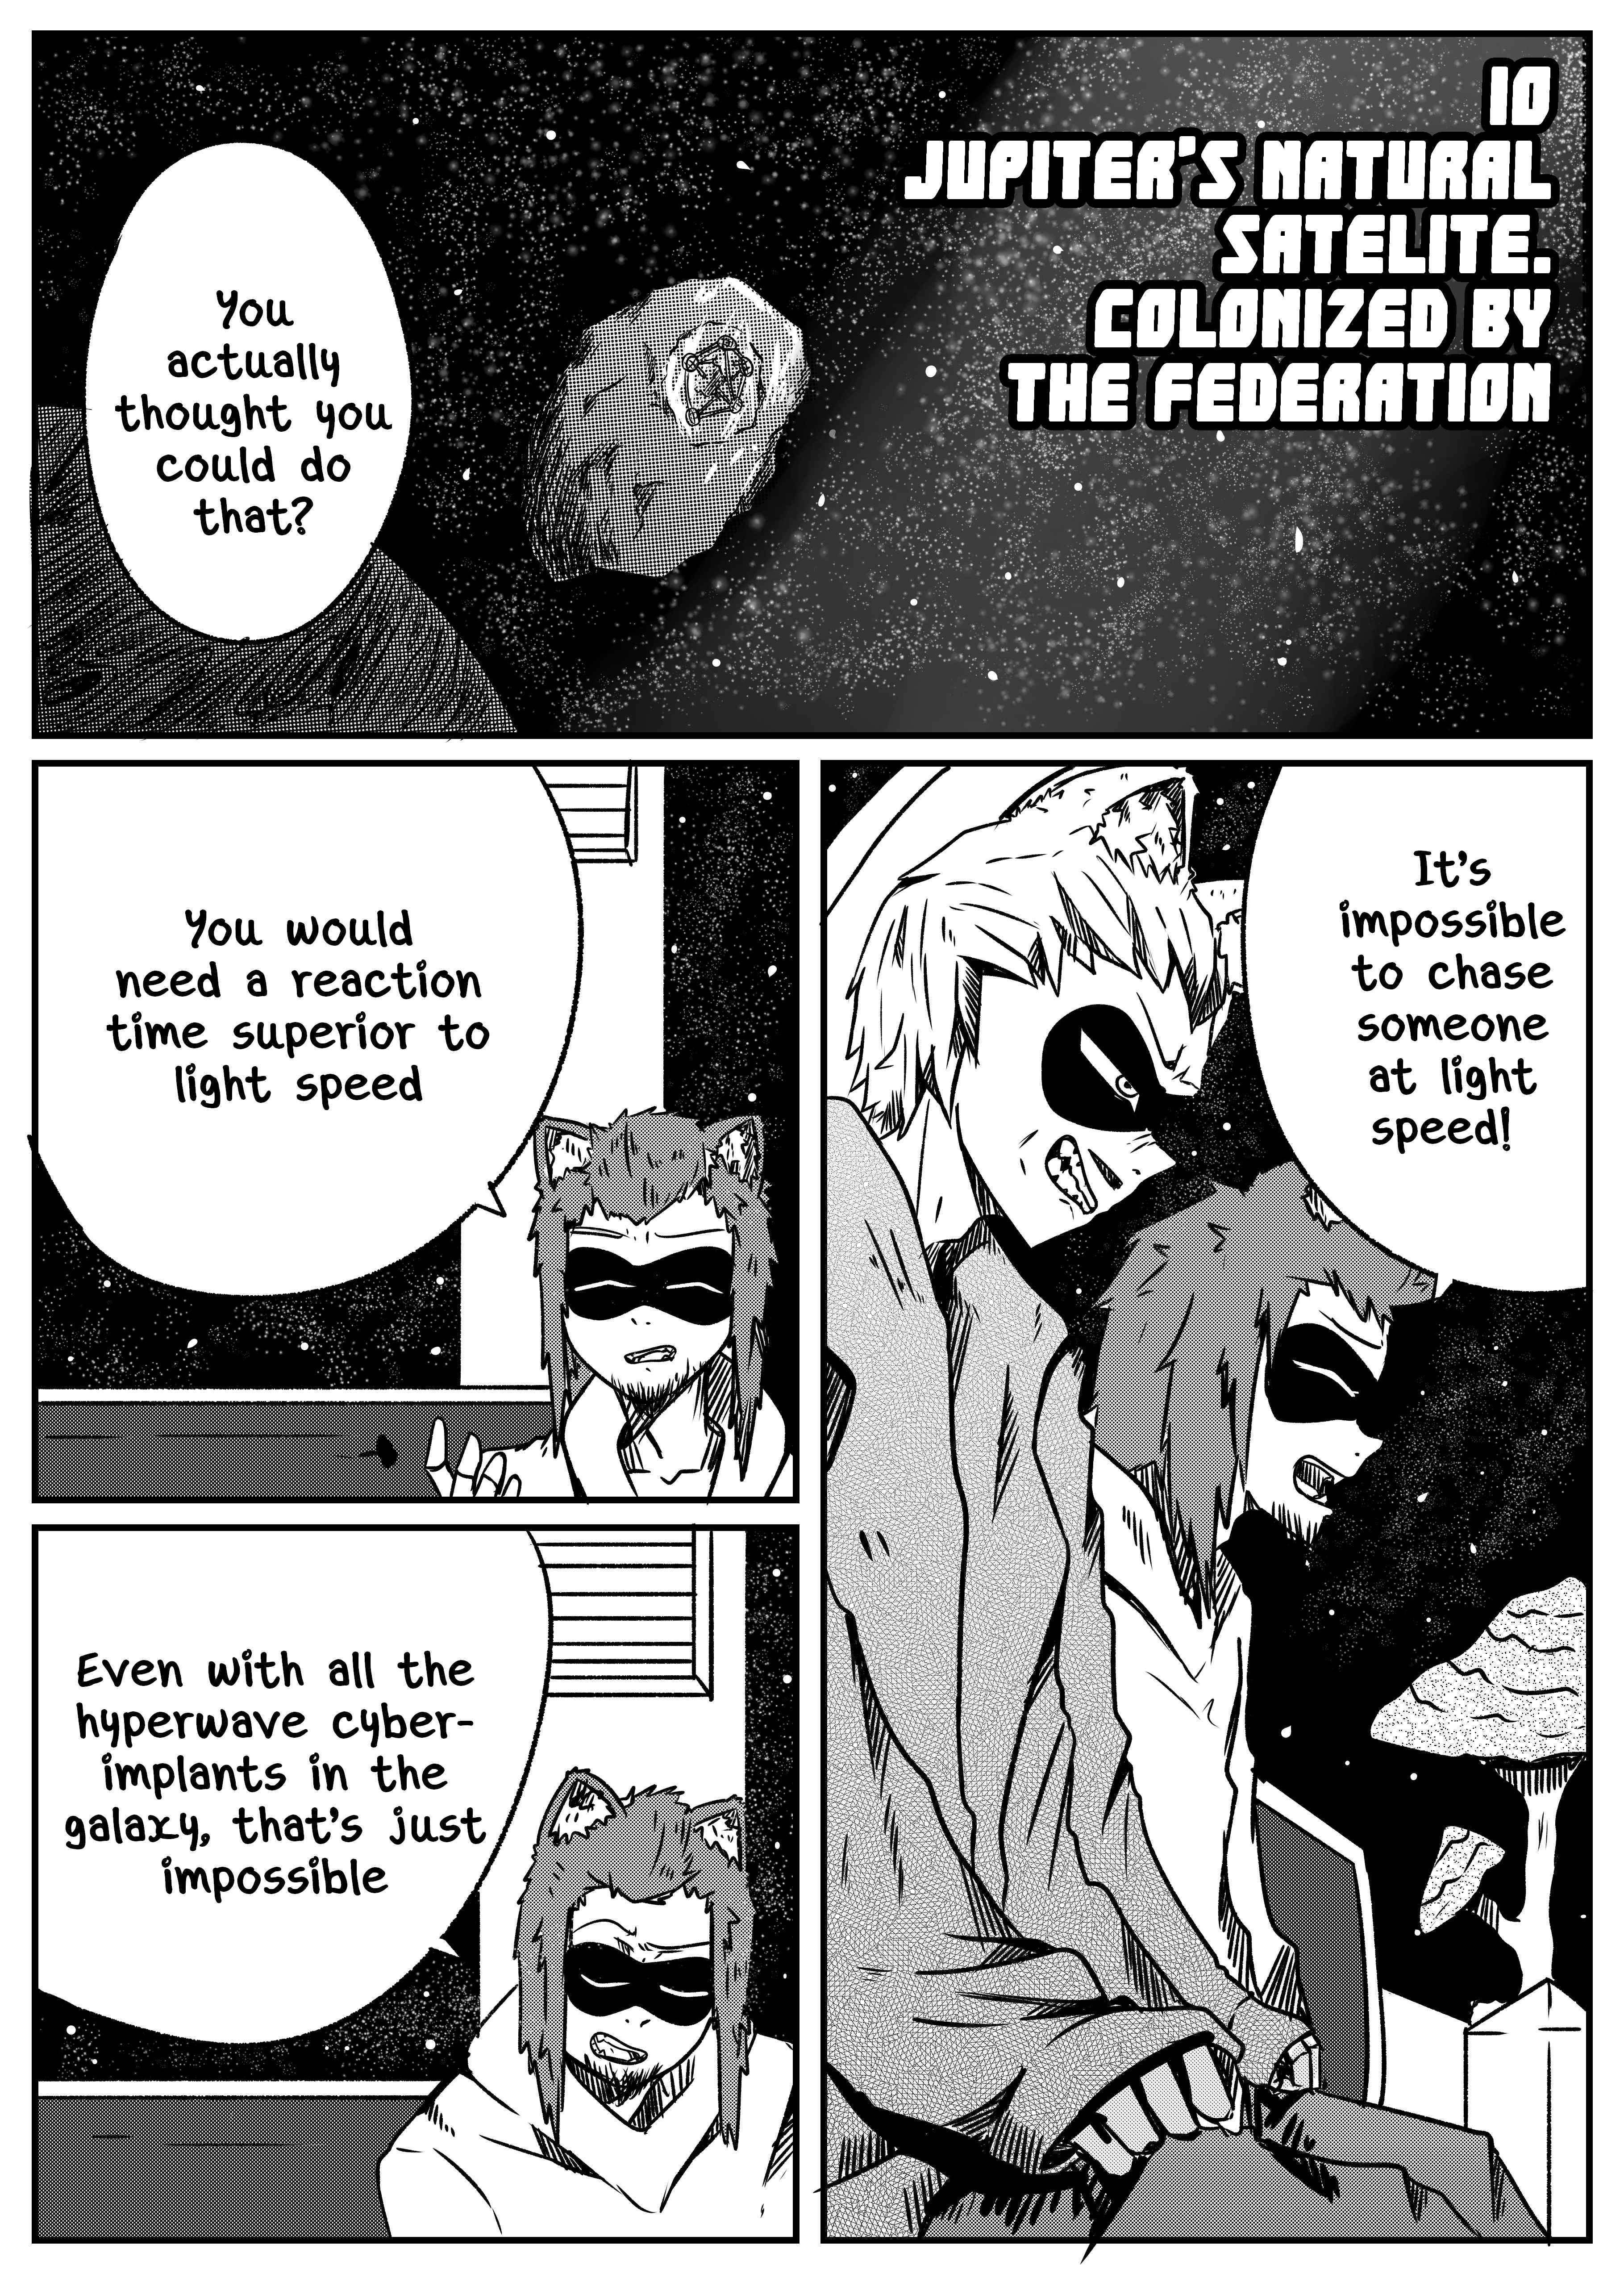 Space Juggernaut - Page 2